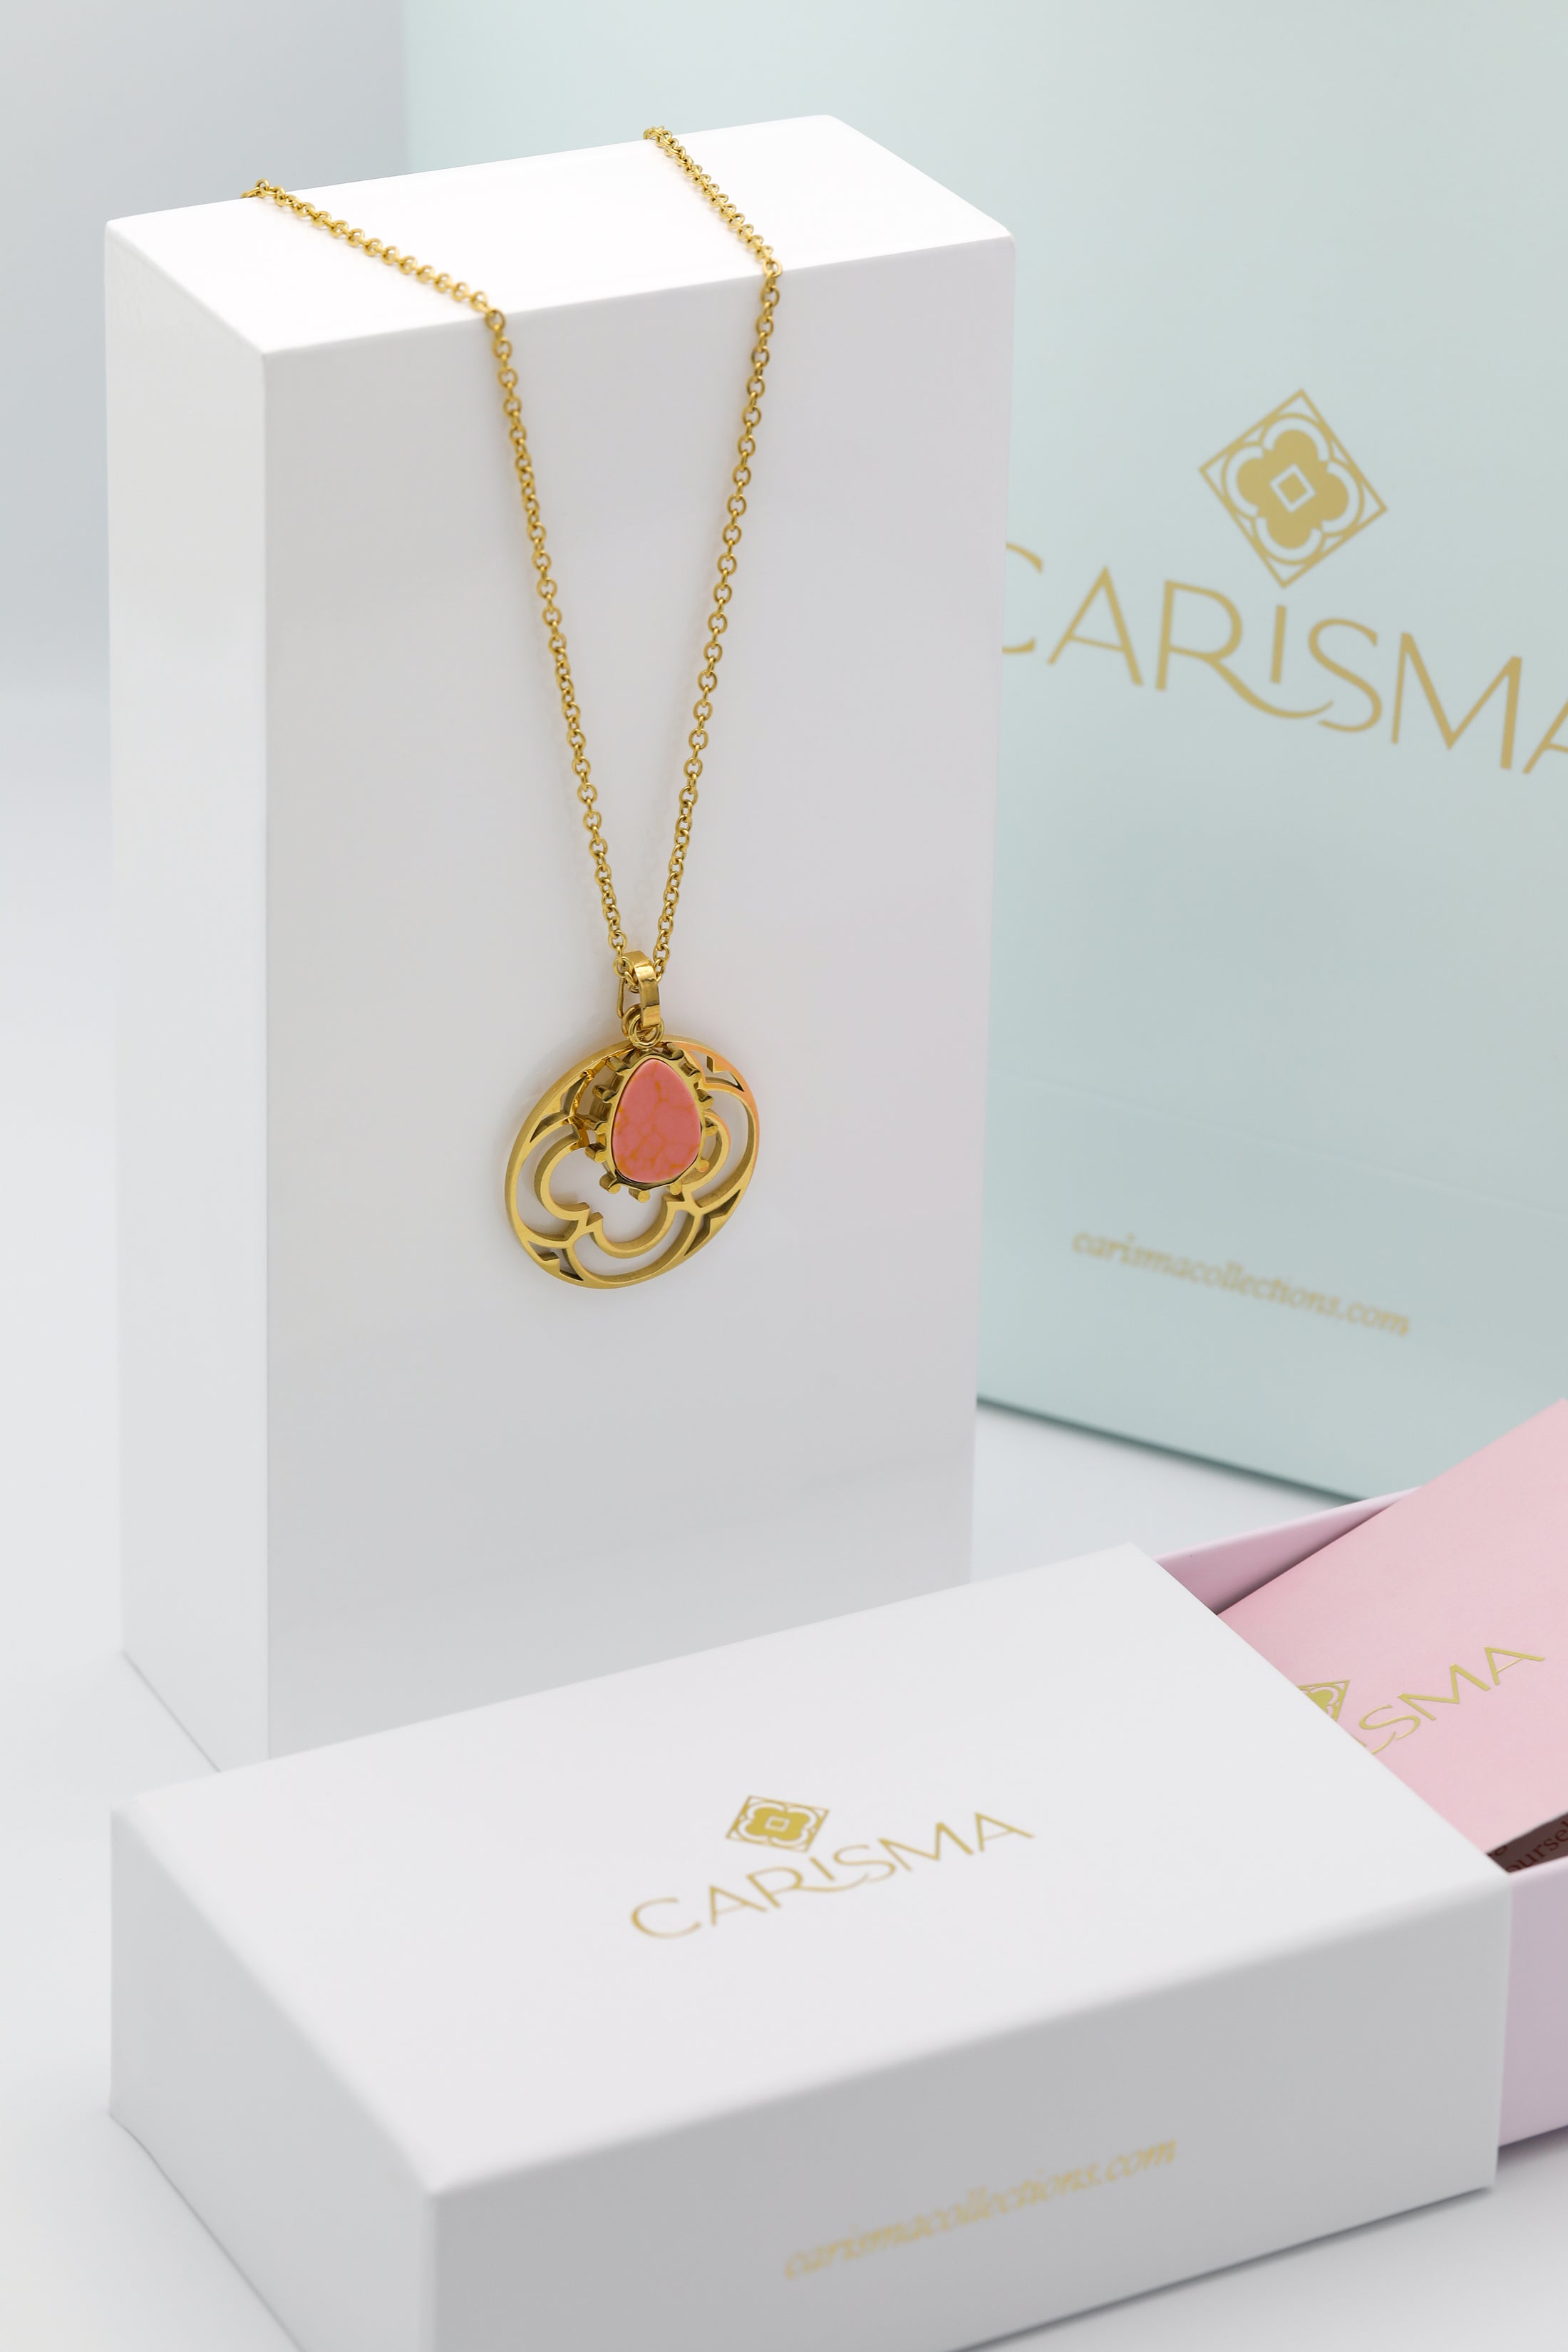 Prickly Pear Orange Stone Pendant &amp; Large Carisma Logo Hollow Pendant Necklace Gift Set